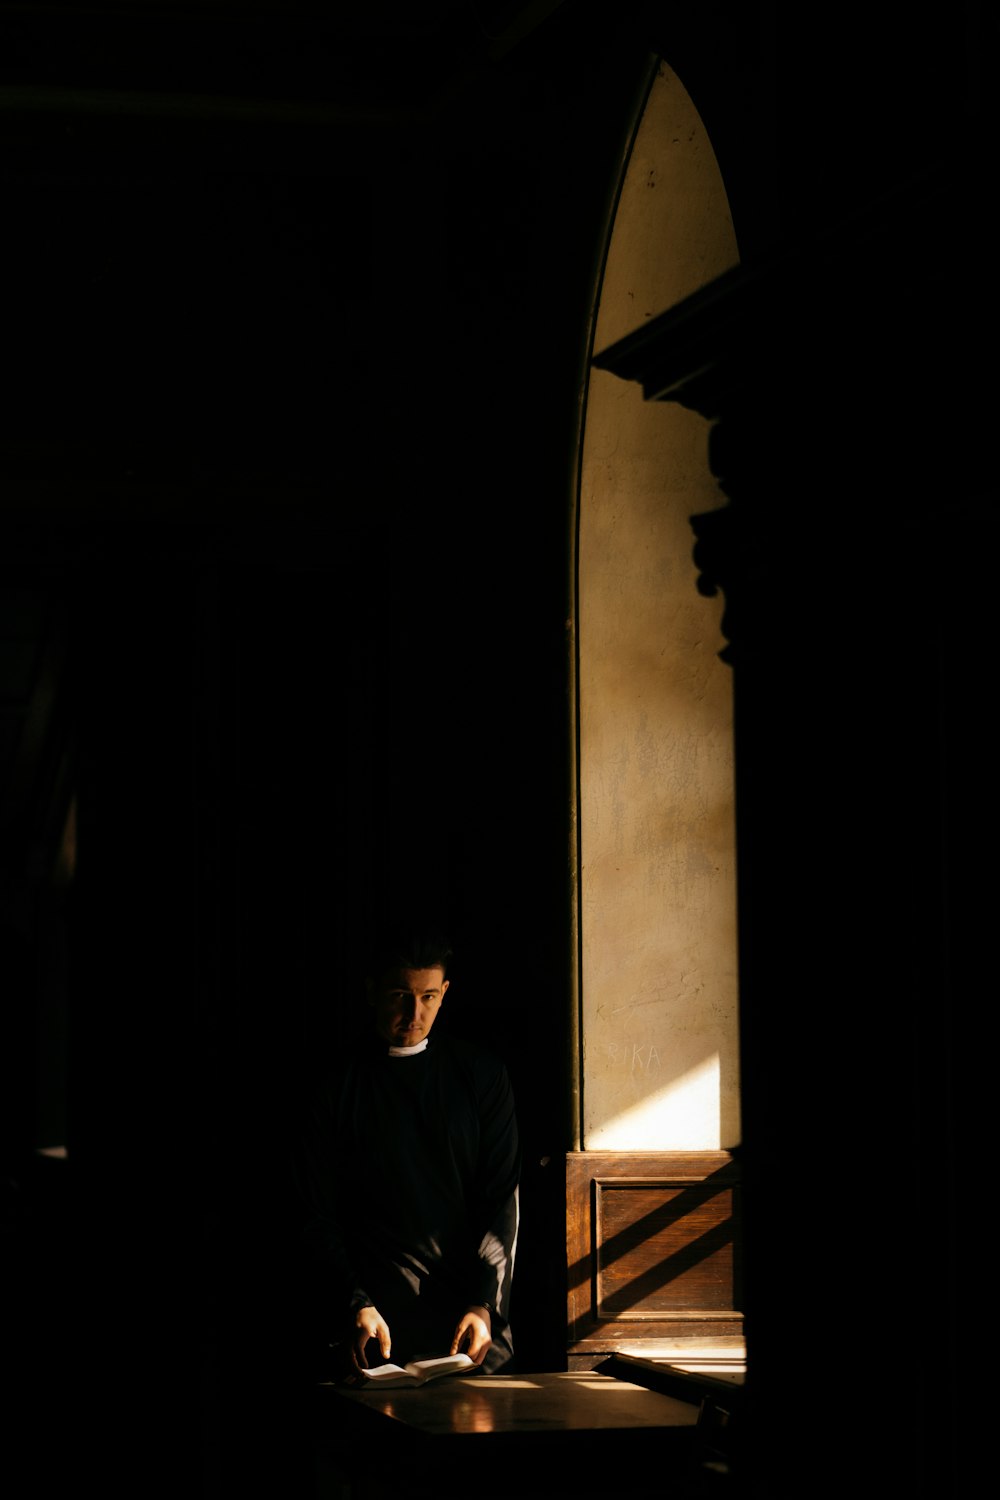 man in black shirt standing near doorway